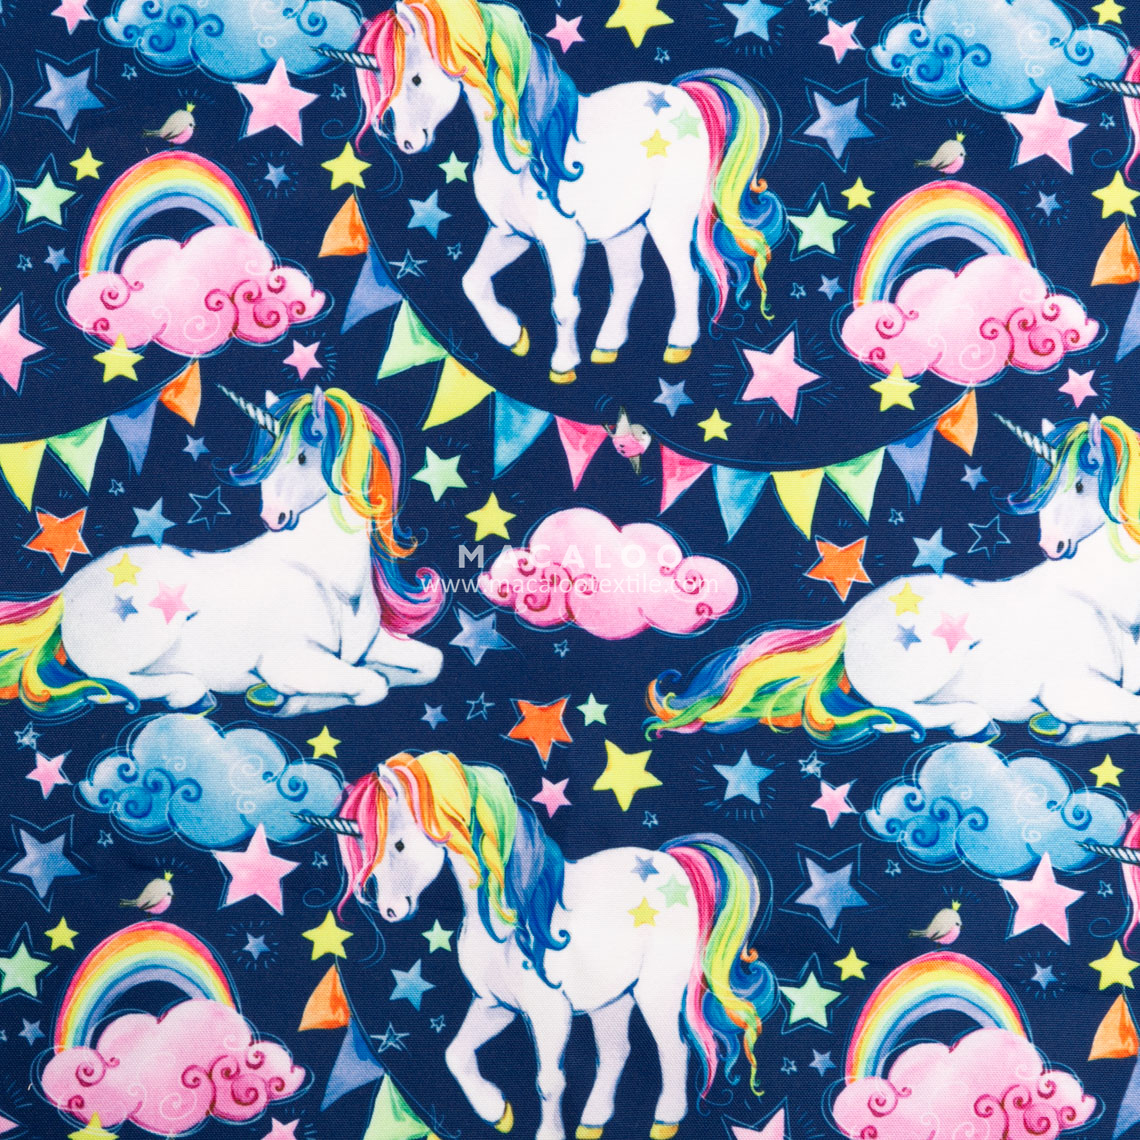 Wholesale vibrant color unicorns printing poly canvas fabric